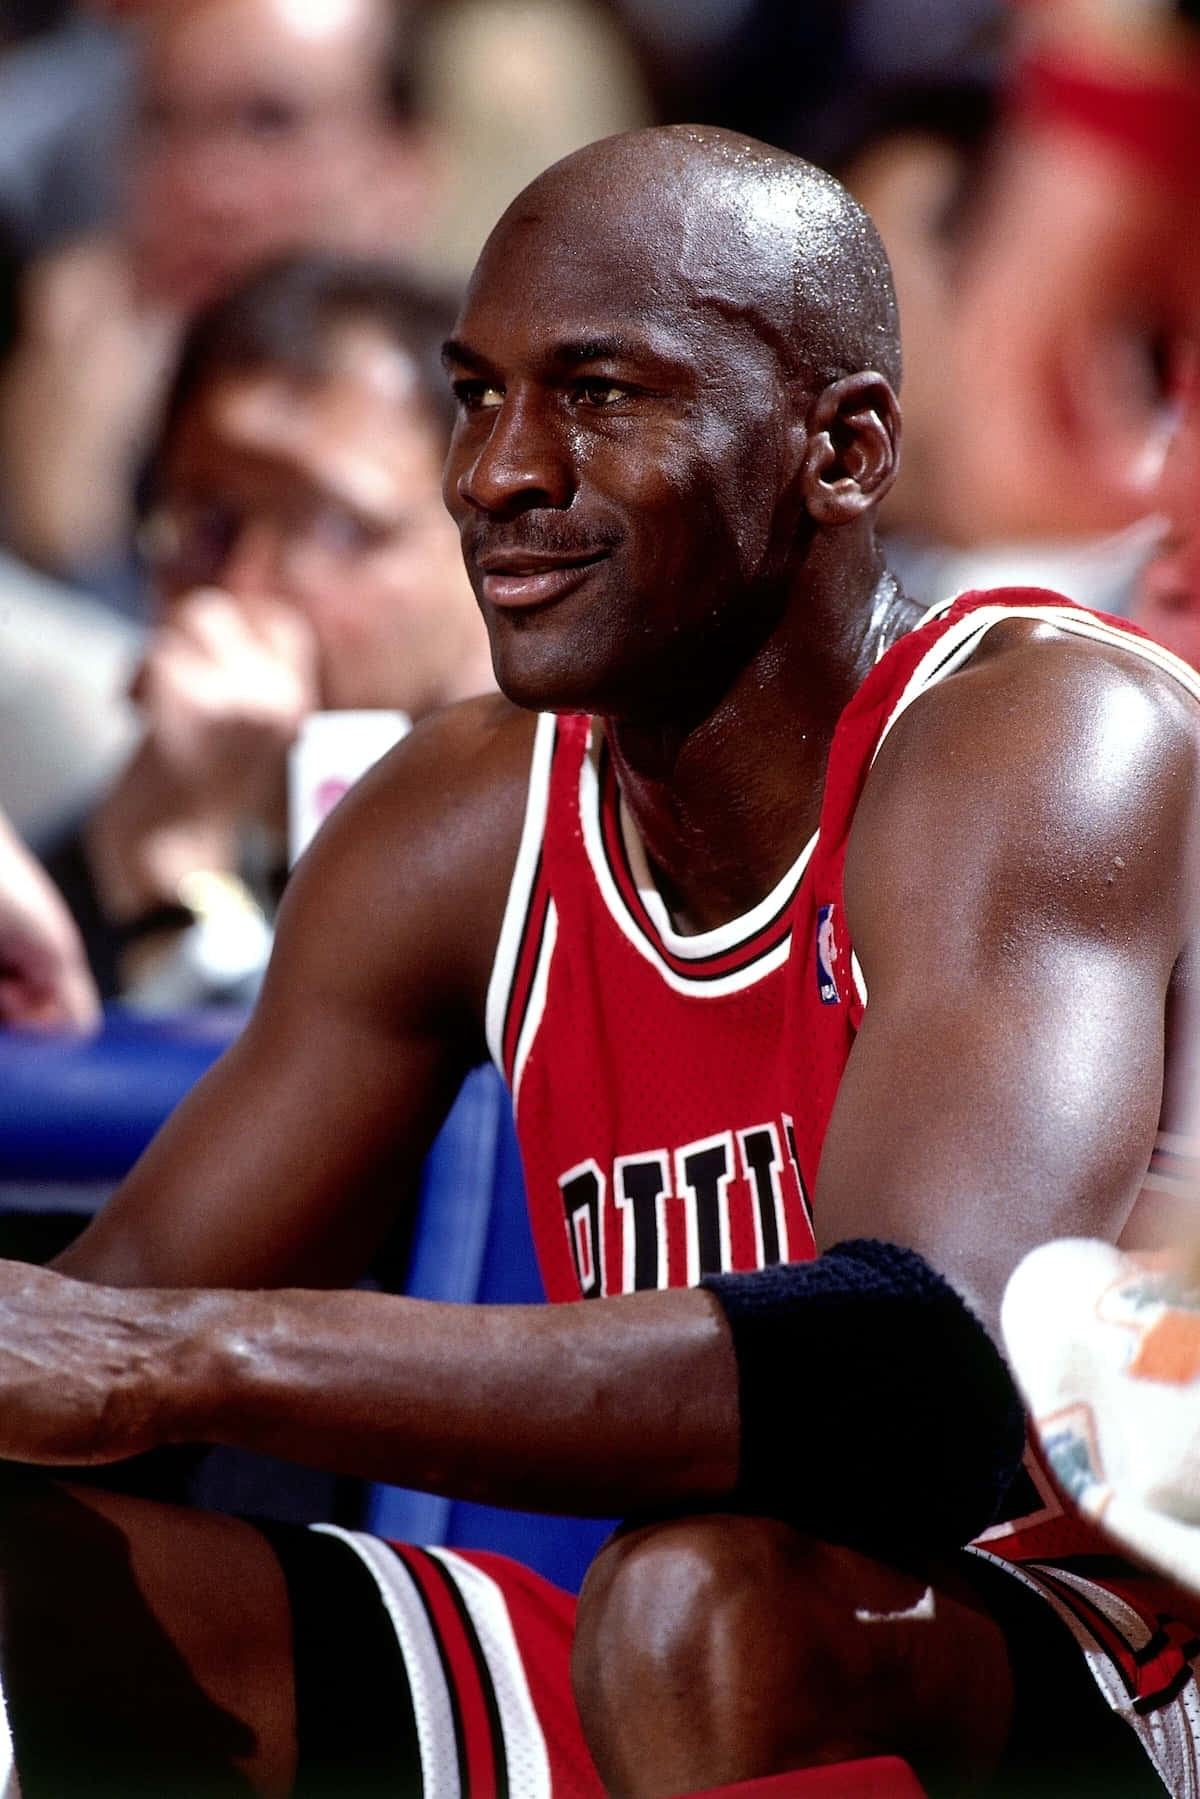 Ikoniskebasketball-stjerne Michael Jordan.